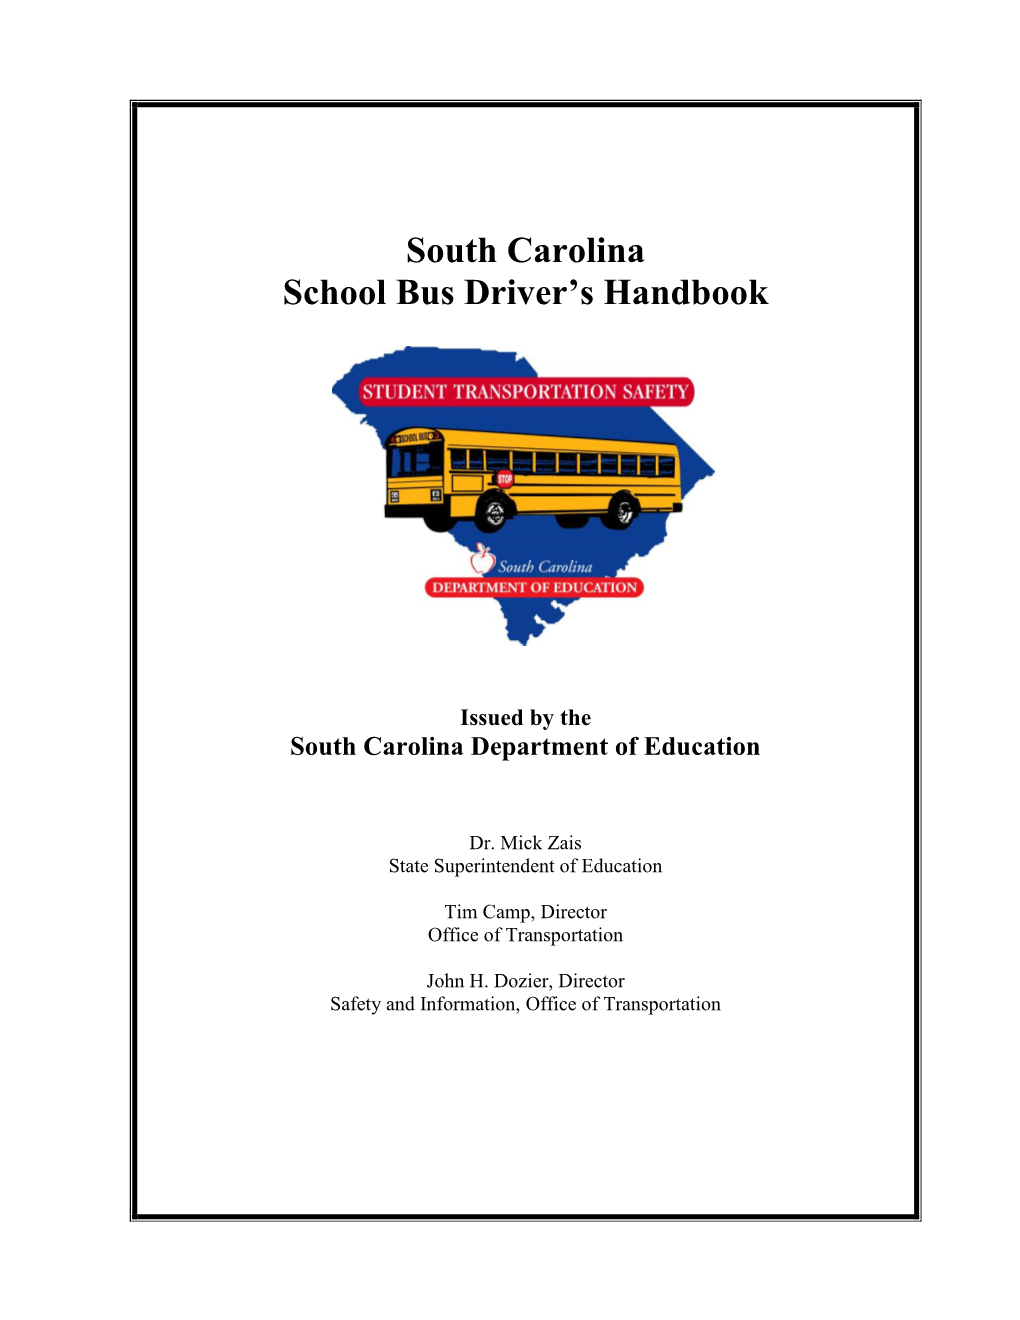 South Carolina School Bus Driver's Handbook